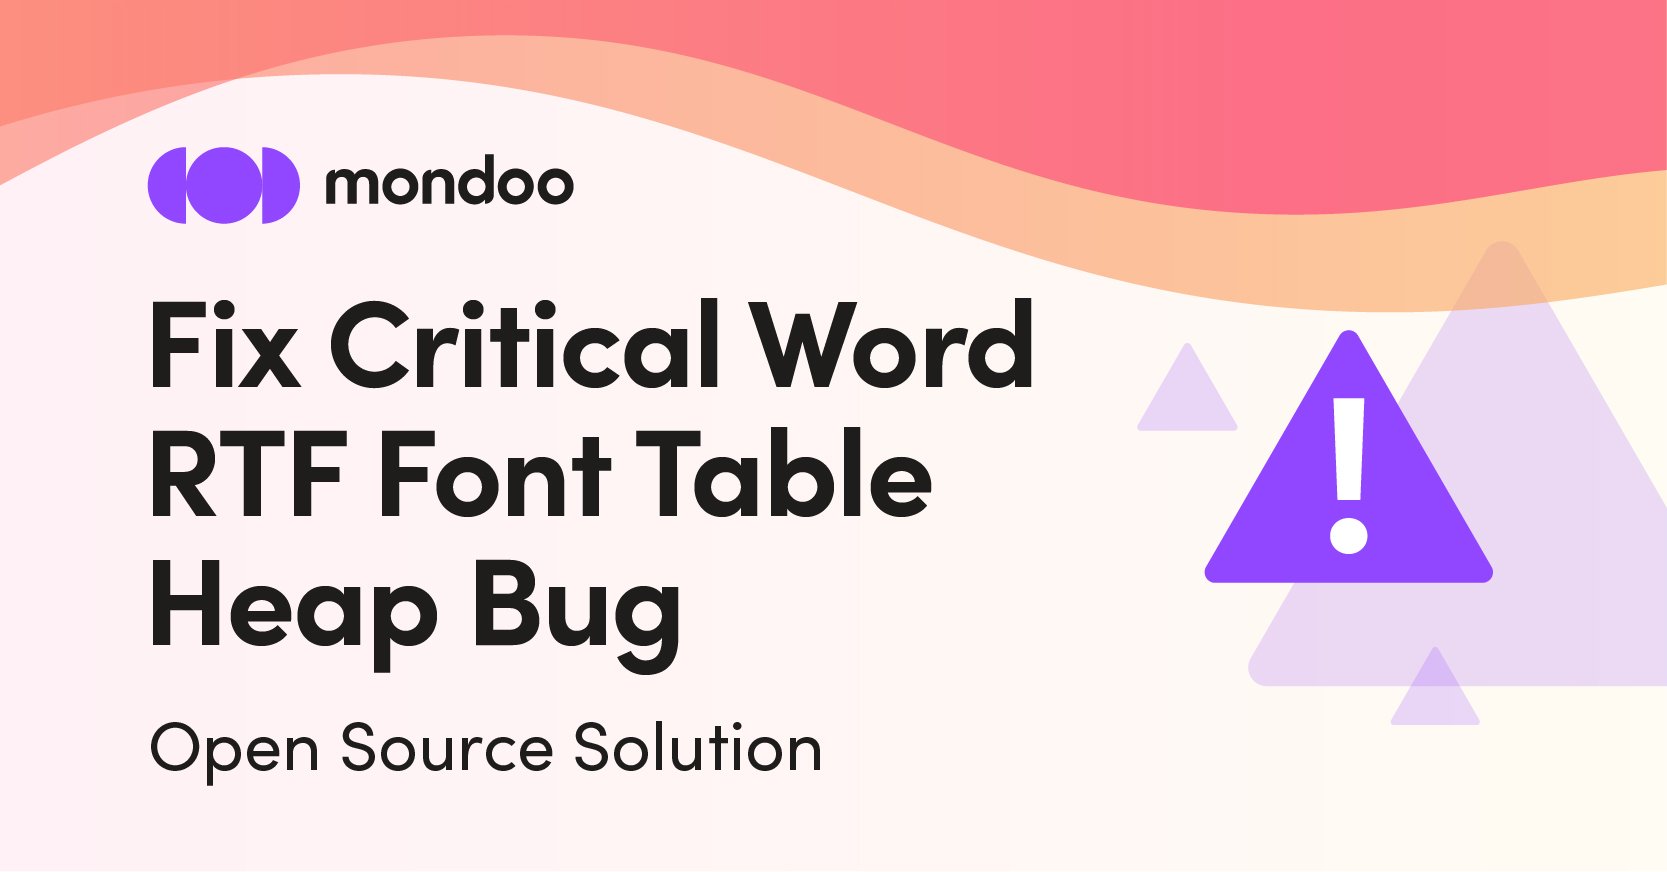 Mondoo_graphics_Fix Critical Word RTF Font Table Heap Bug-FINAL